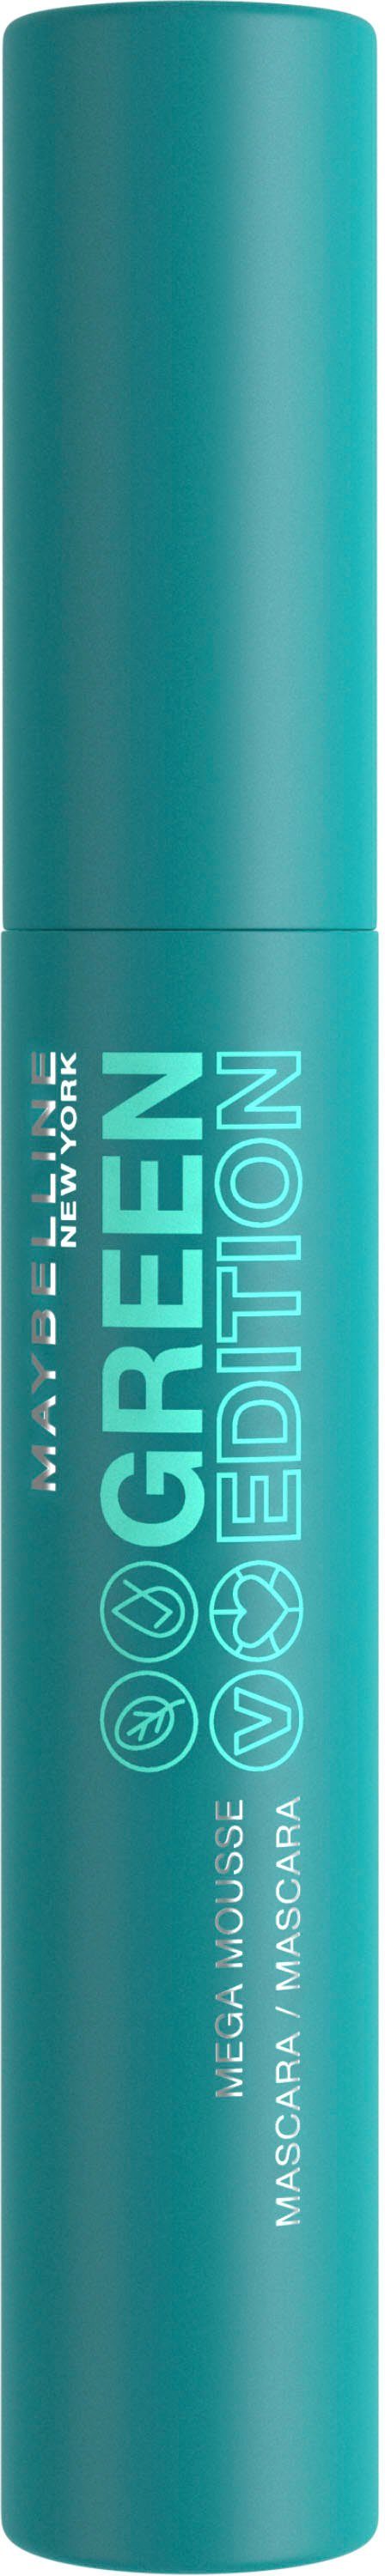 Green braun MAYBELLINE Edition WSH Mascara NEW Mousse YORK Mascara 003 Mega